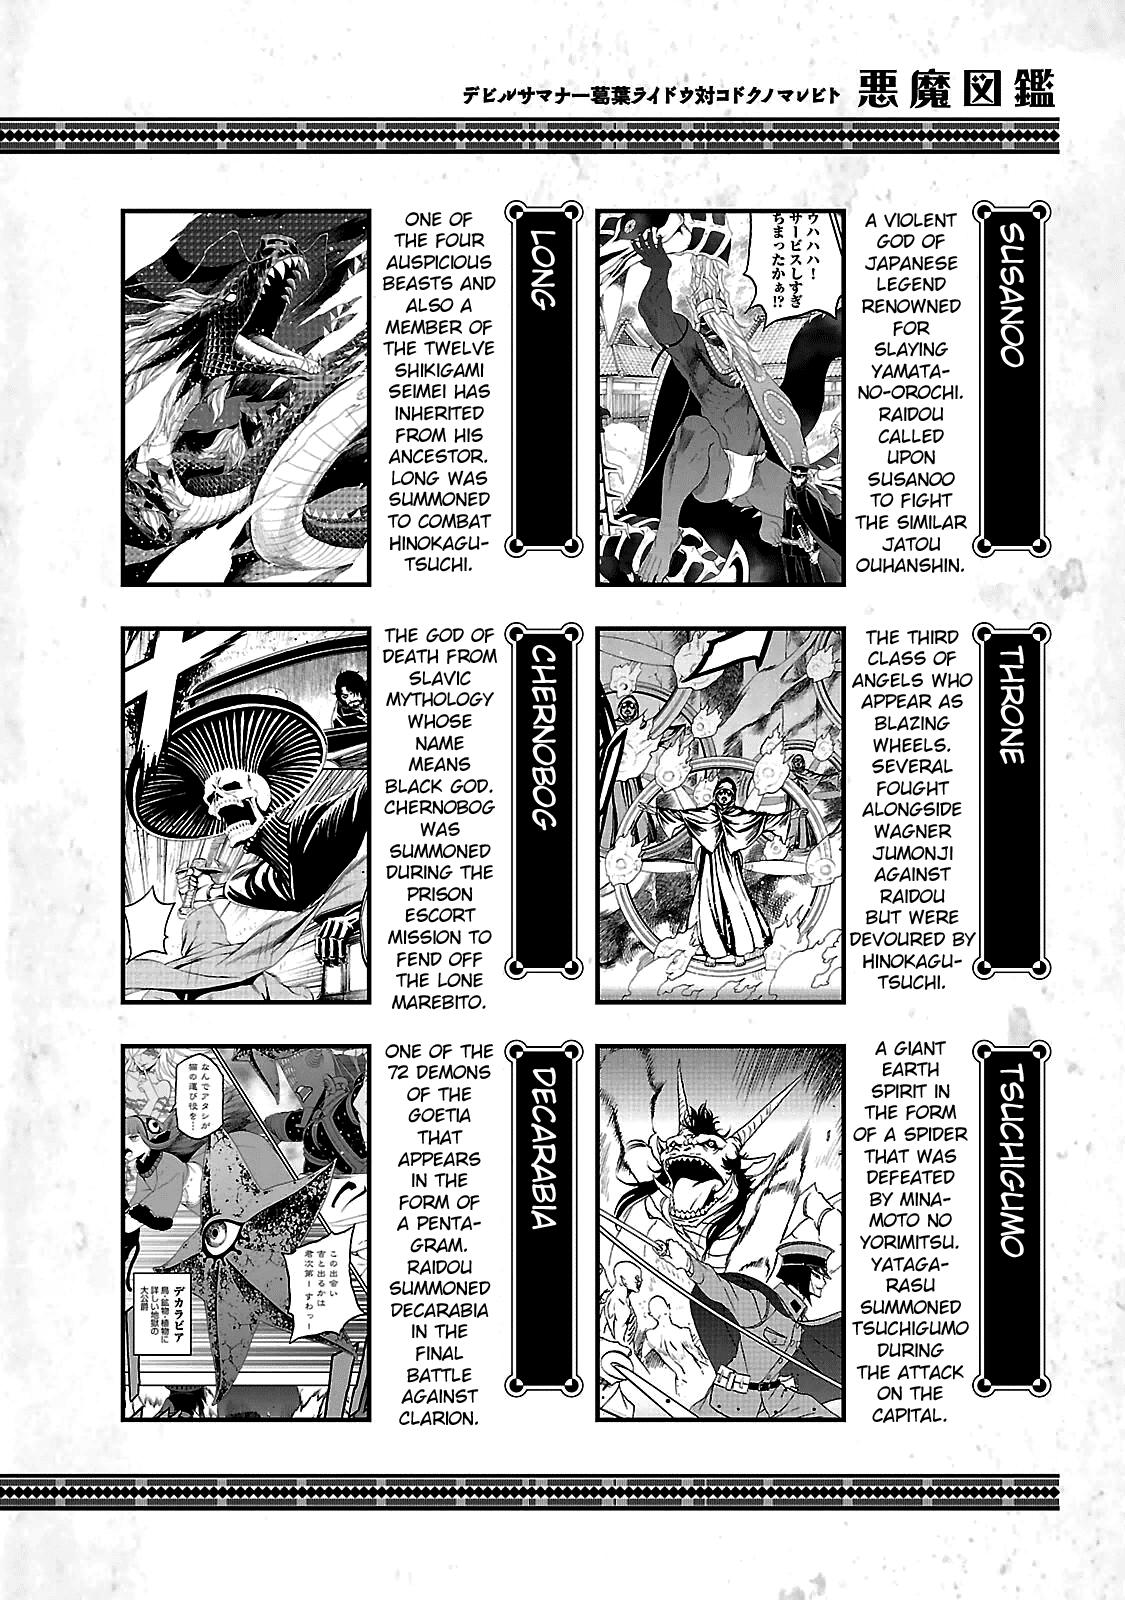 Devil Summoner Kuzunoha Raidou Tai Kodoku No Marebito Chapter 35 4 100 Compendium End Mangakakalots Com